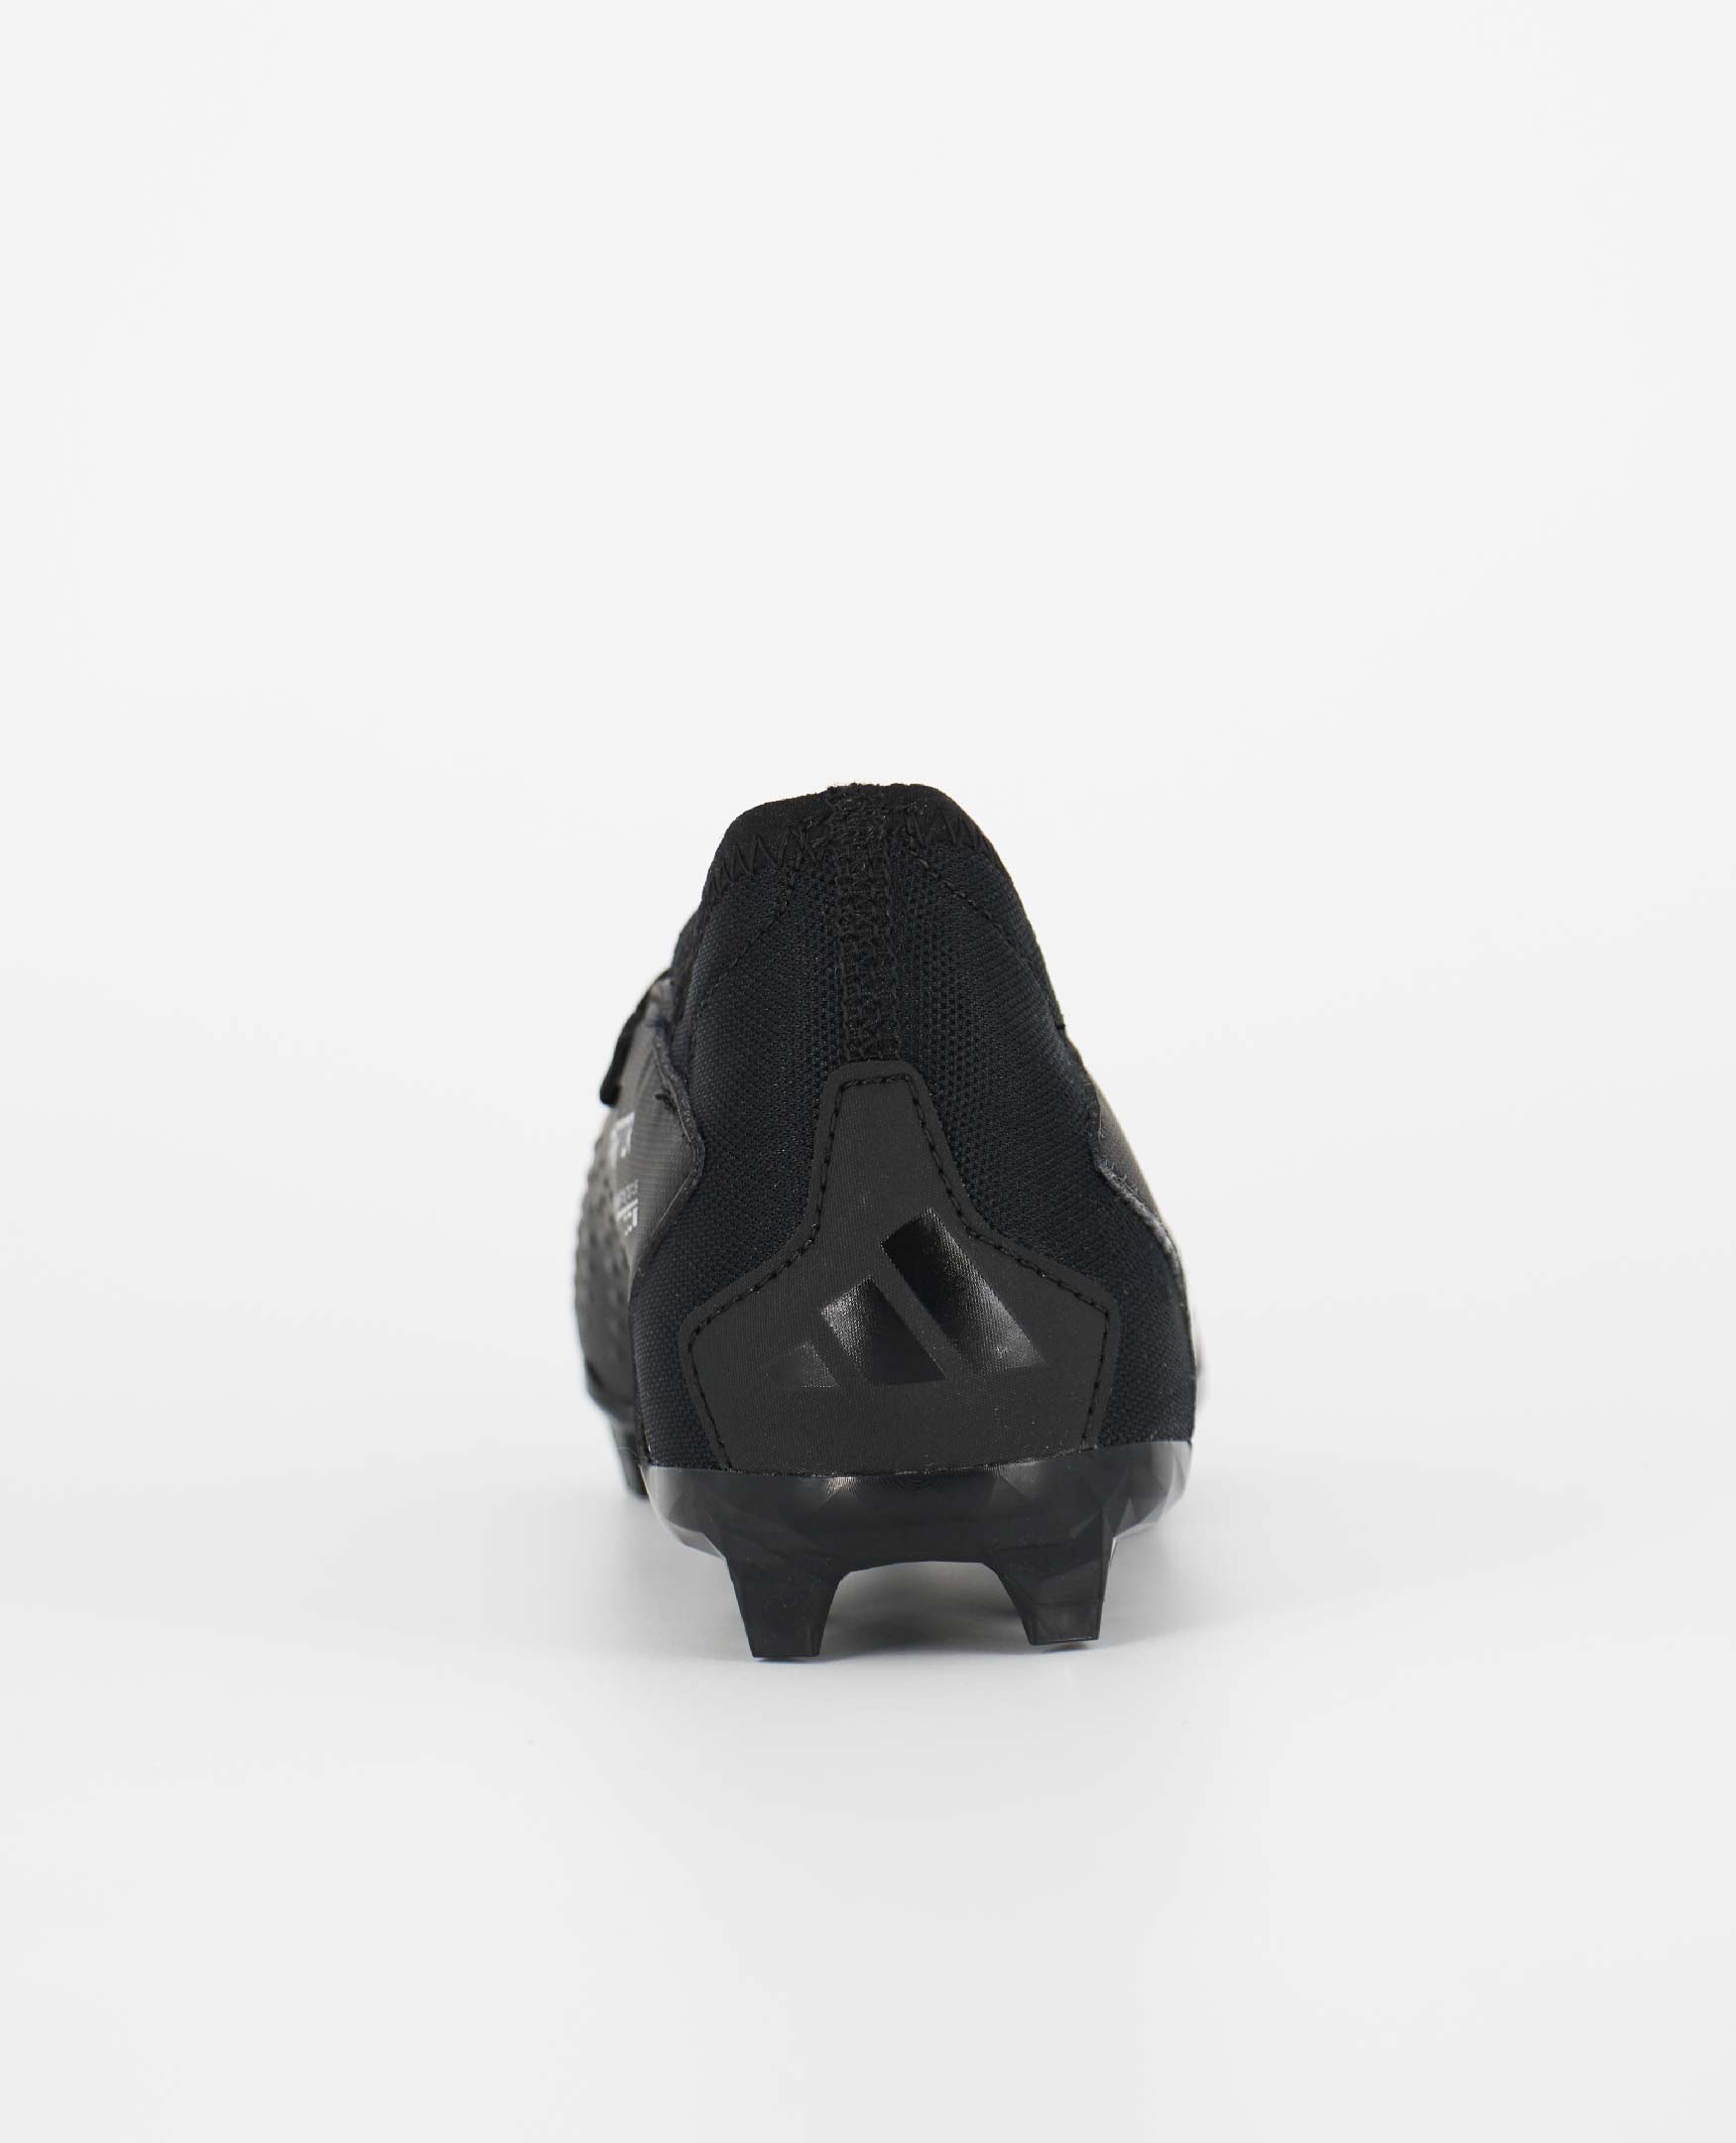 Adidas Predator astro sock boots black size 10 worn only few times